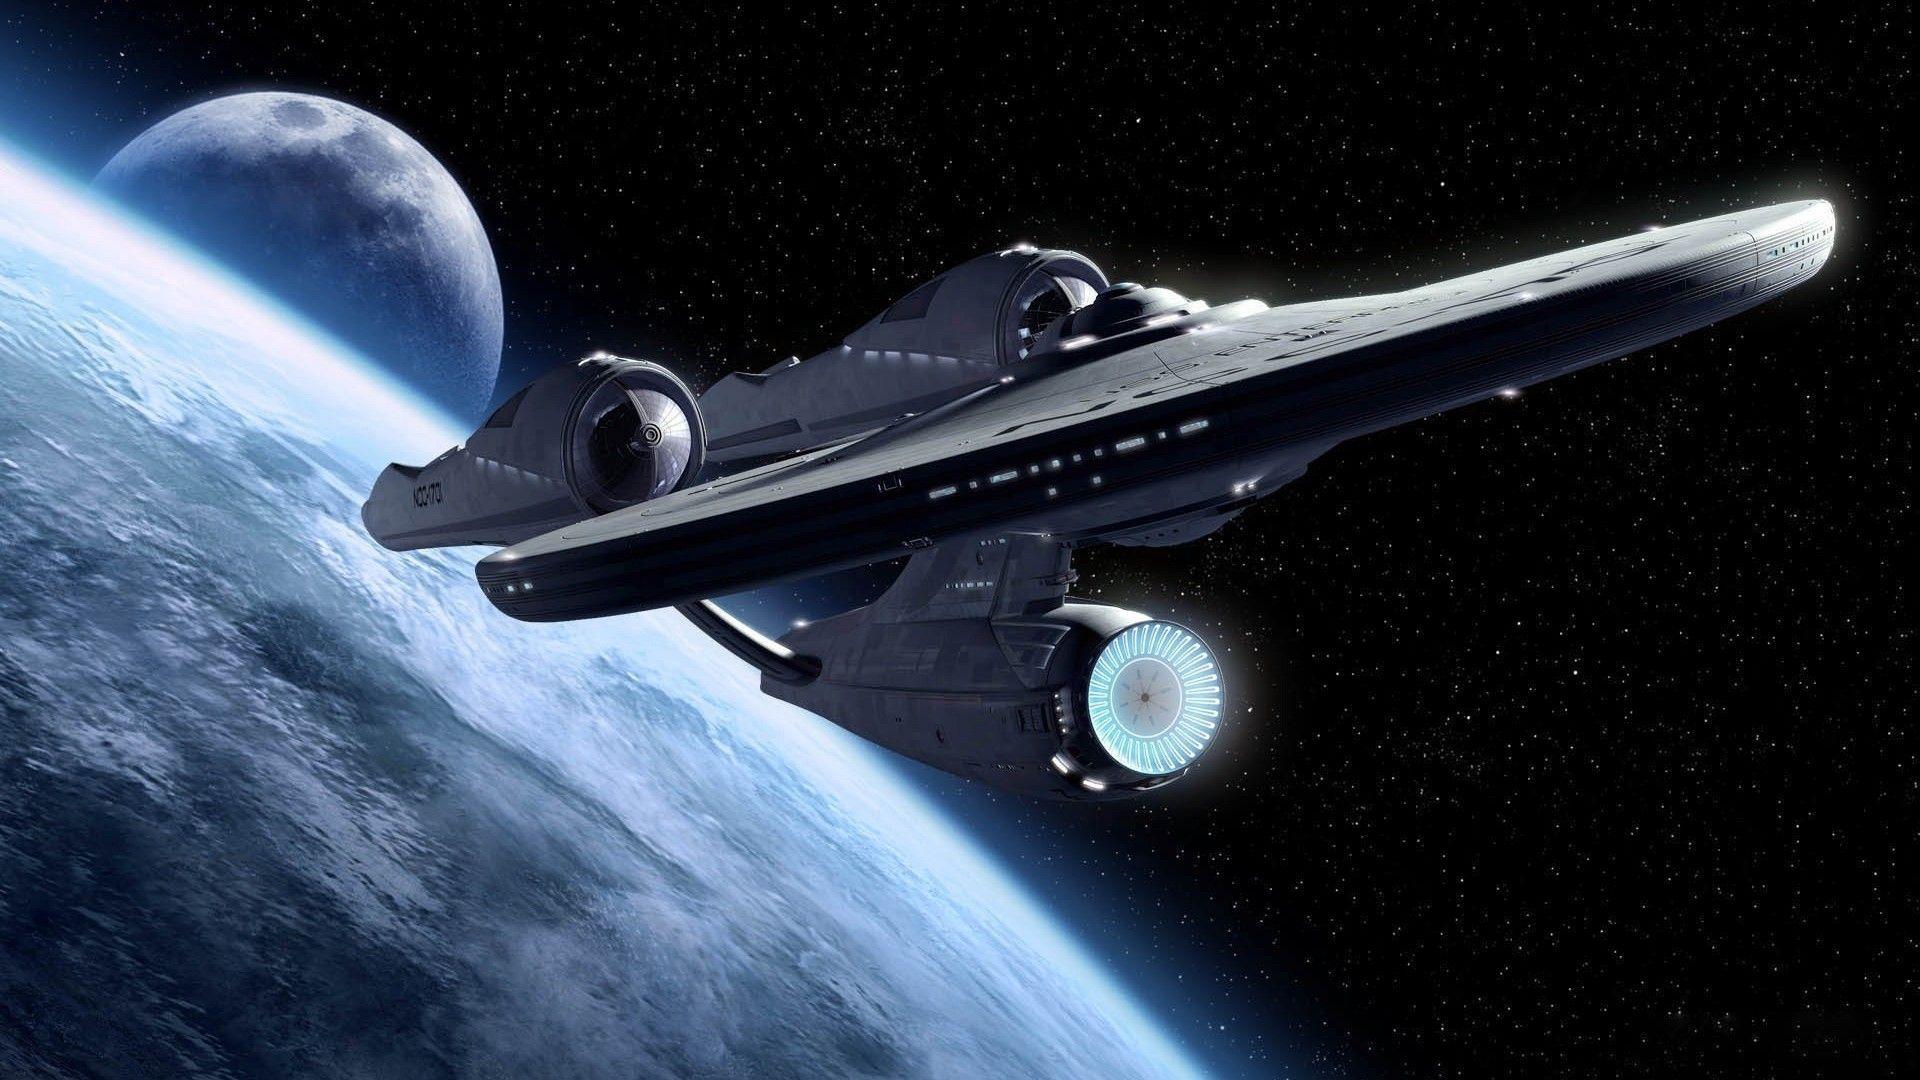 Star Trek Enterprise Poster PC Free Download. Star